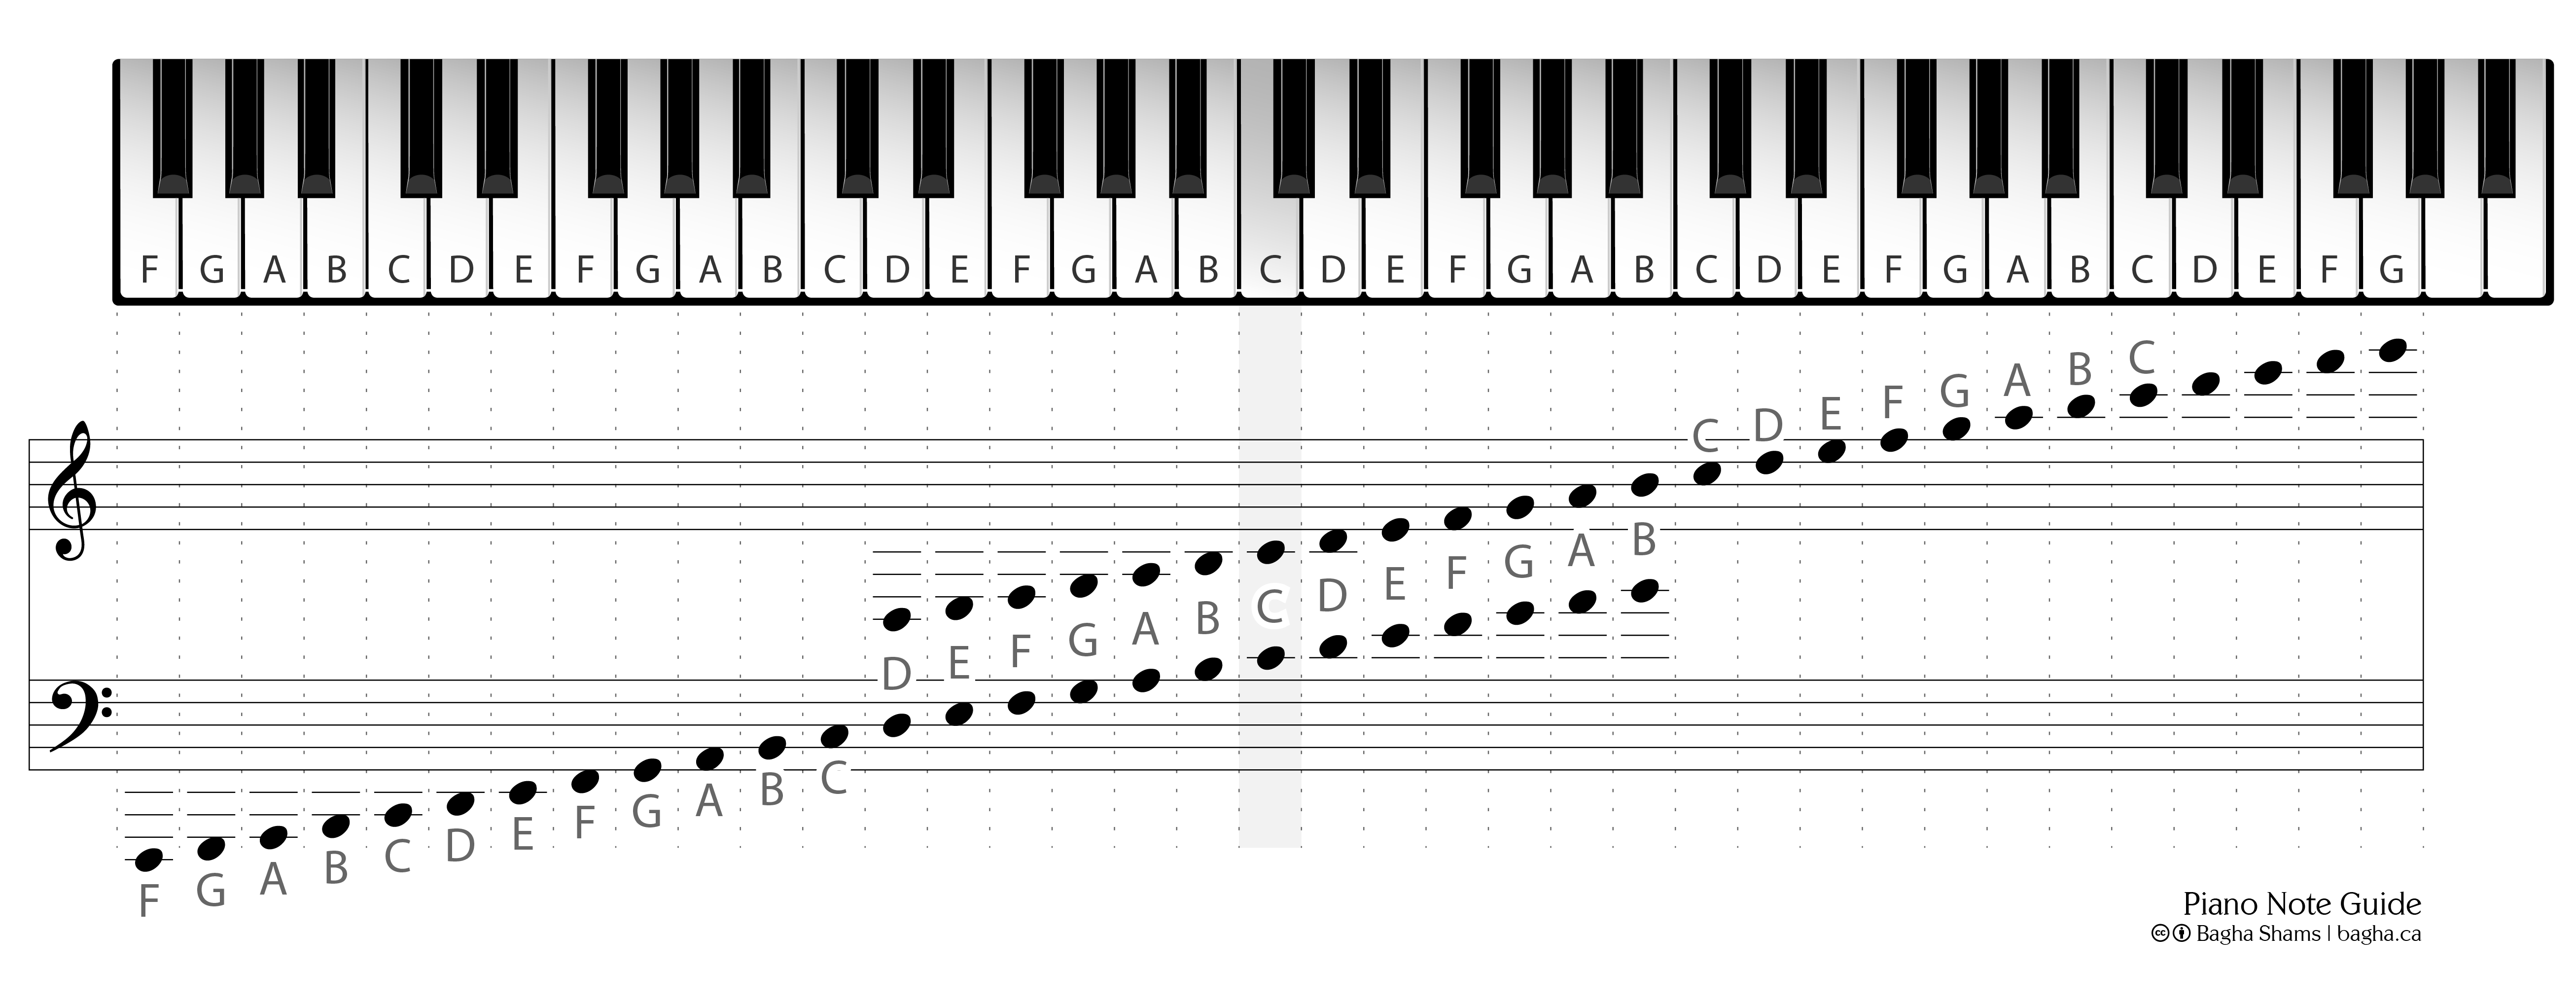 piano key cheat sheet